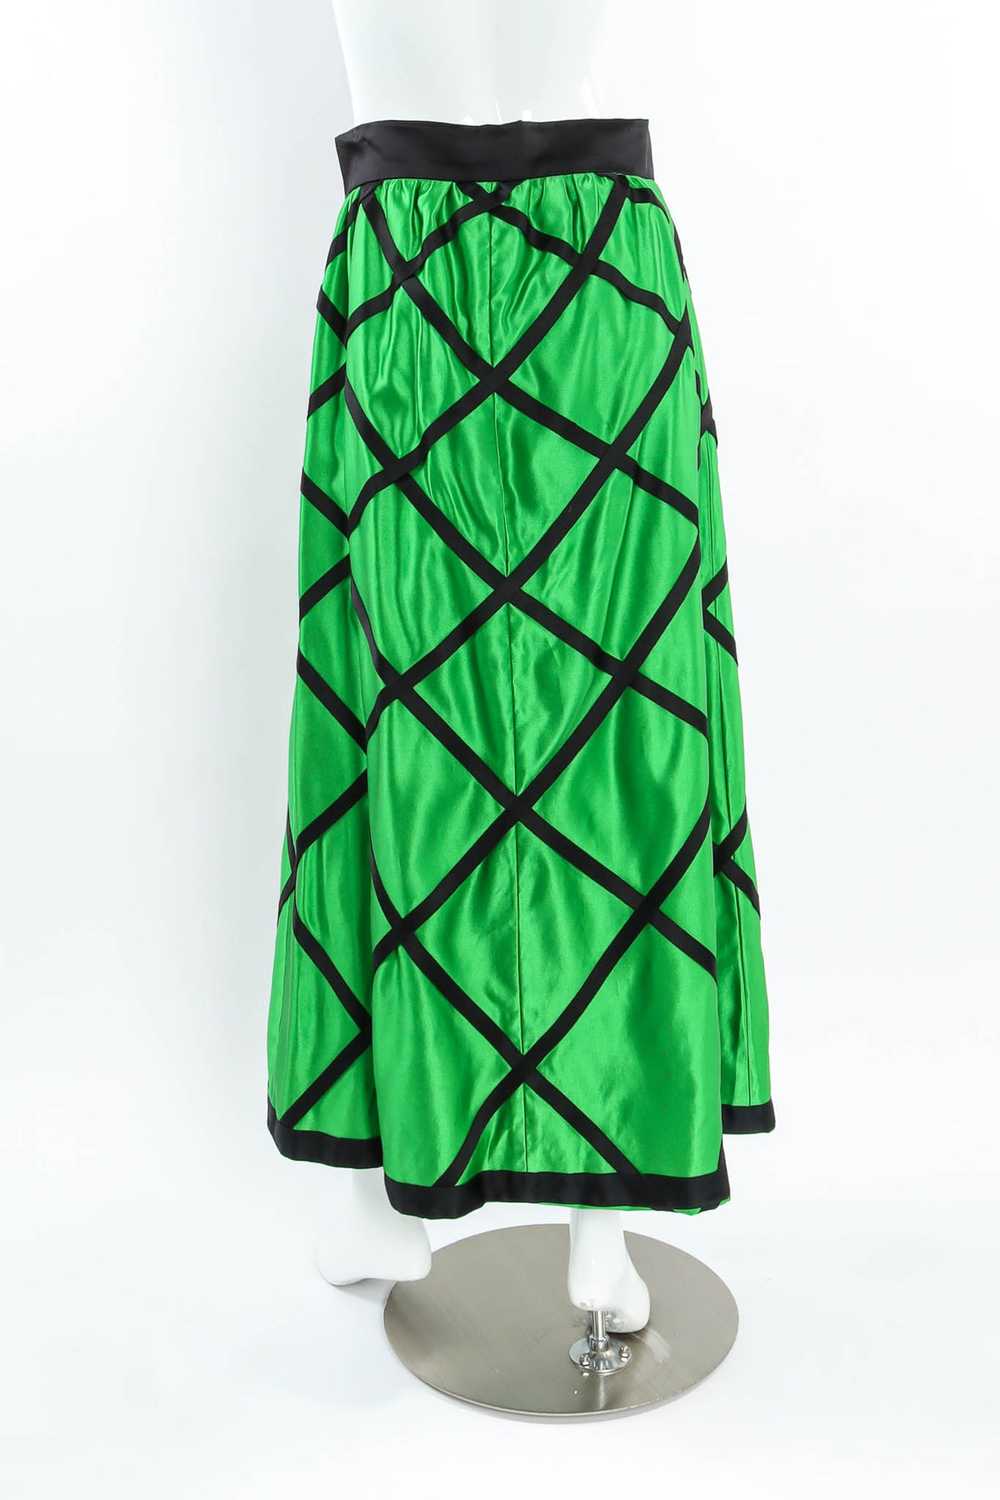 JERRY SILVERMAN Checker Print Hostess Skirt - image 4